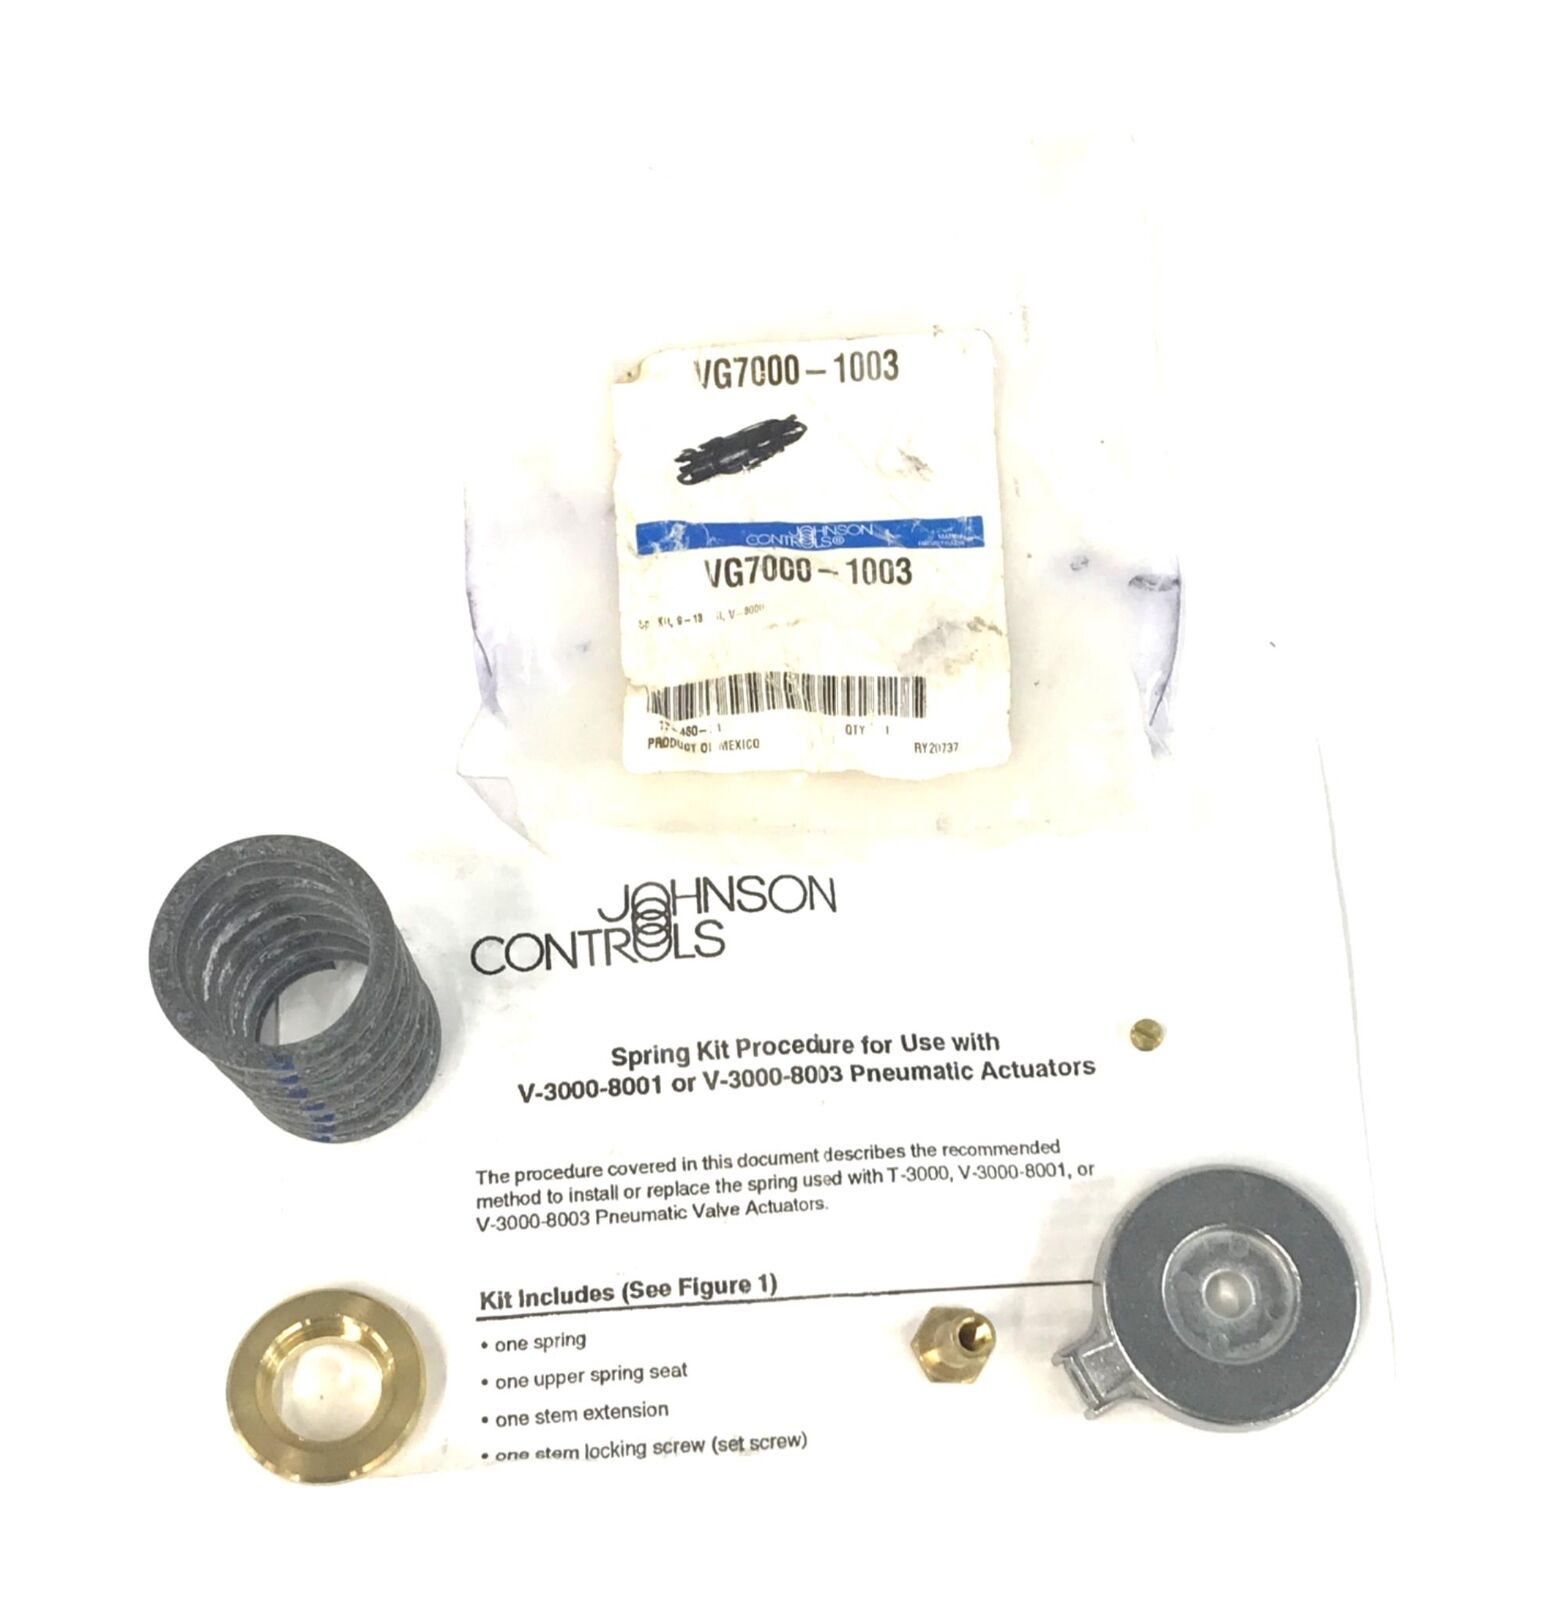 Johnson Controls Actuator Spring Kit 9-13 PSI V-3000 VG7000-1003 NOS